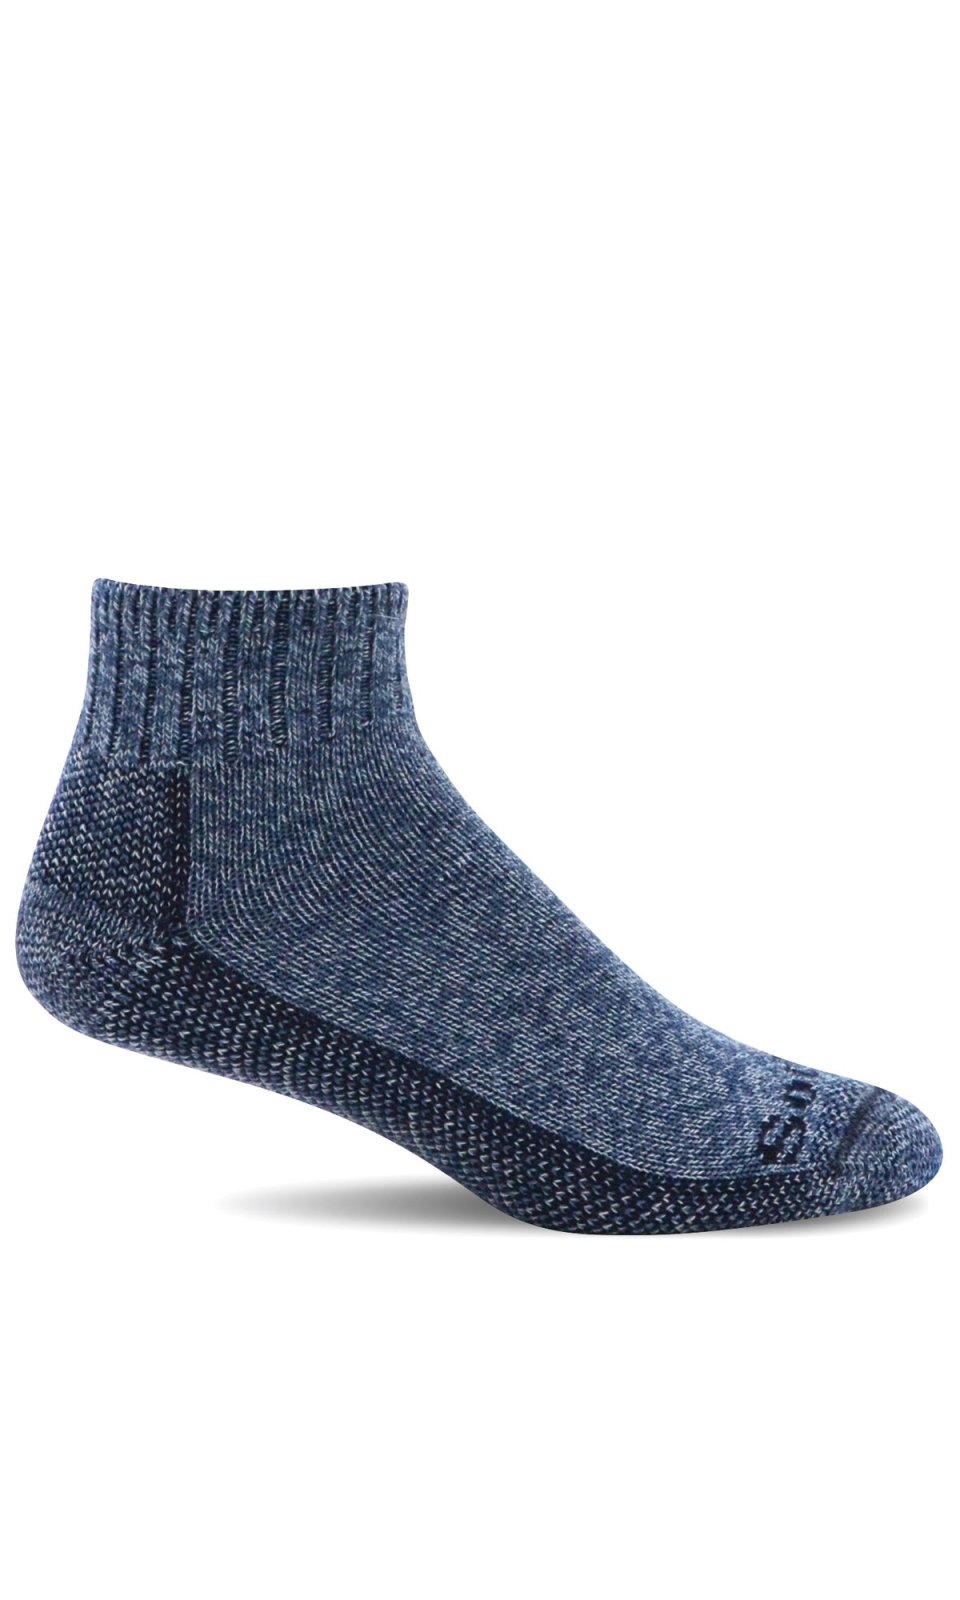 Sockwell Big Easy Mini Relaxed Fit Socks (Women's)